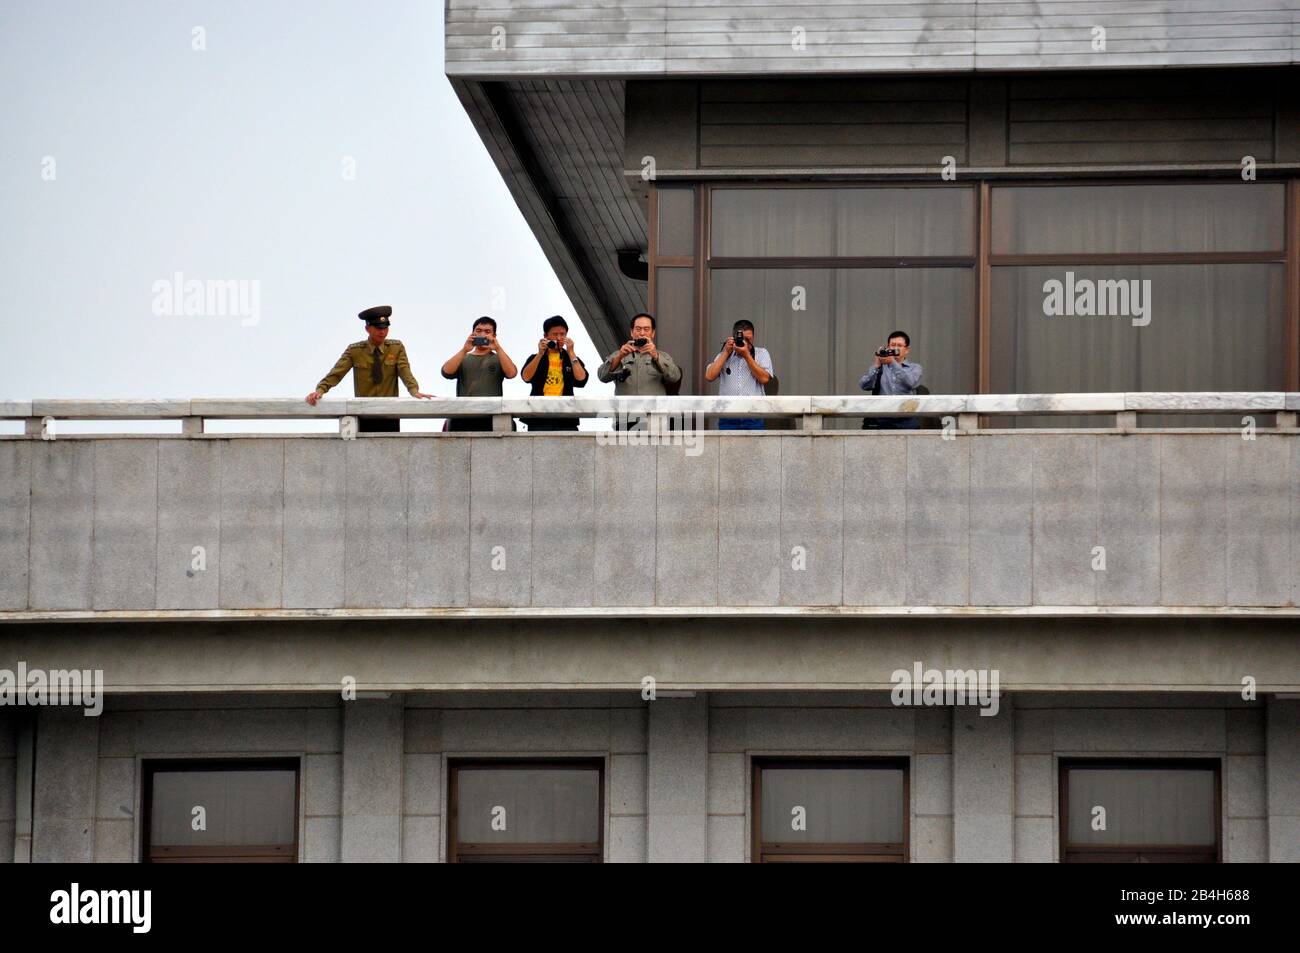 Asia, Republic of Korea, South Korea, Seoul, DMZ, demilitarized zone on the border with North and South Korea, North Korean soldier on balcony. Stock Photo